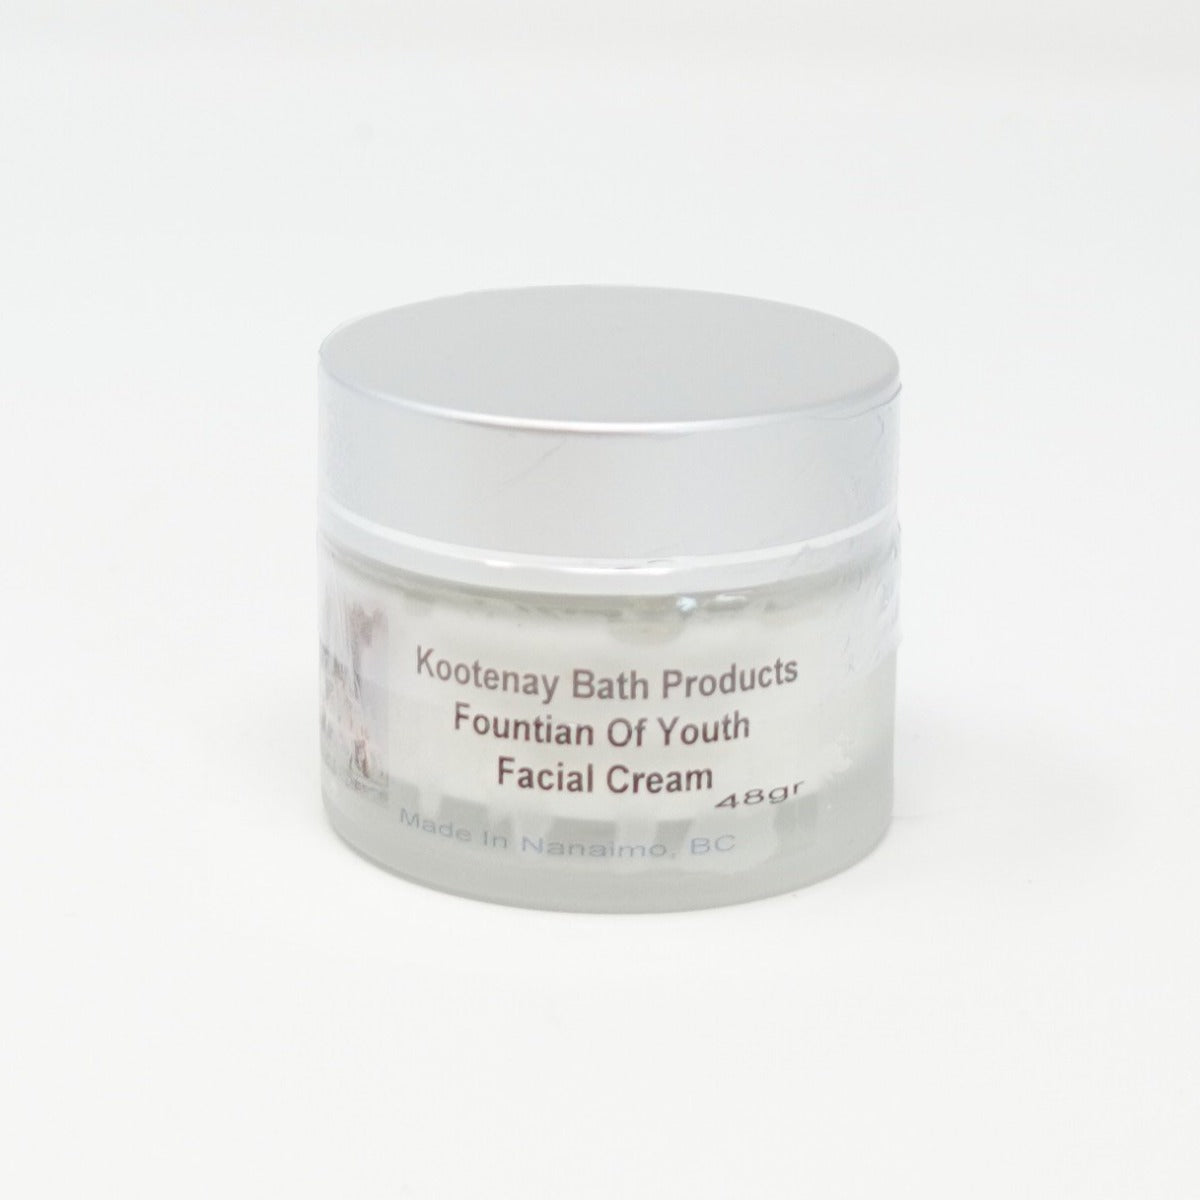 Kootenay Bath Products - facial cream